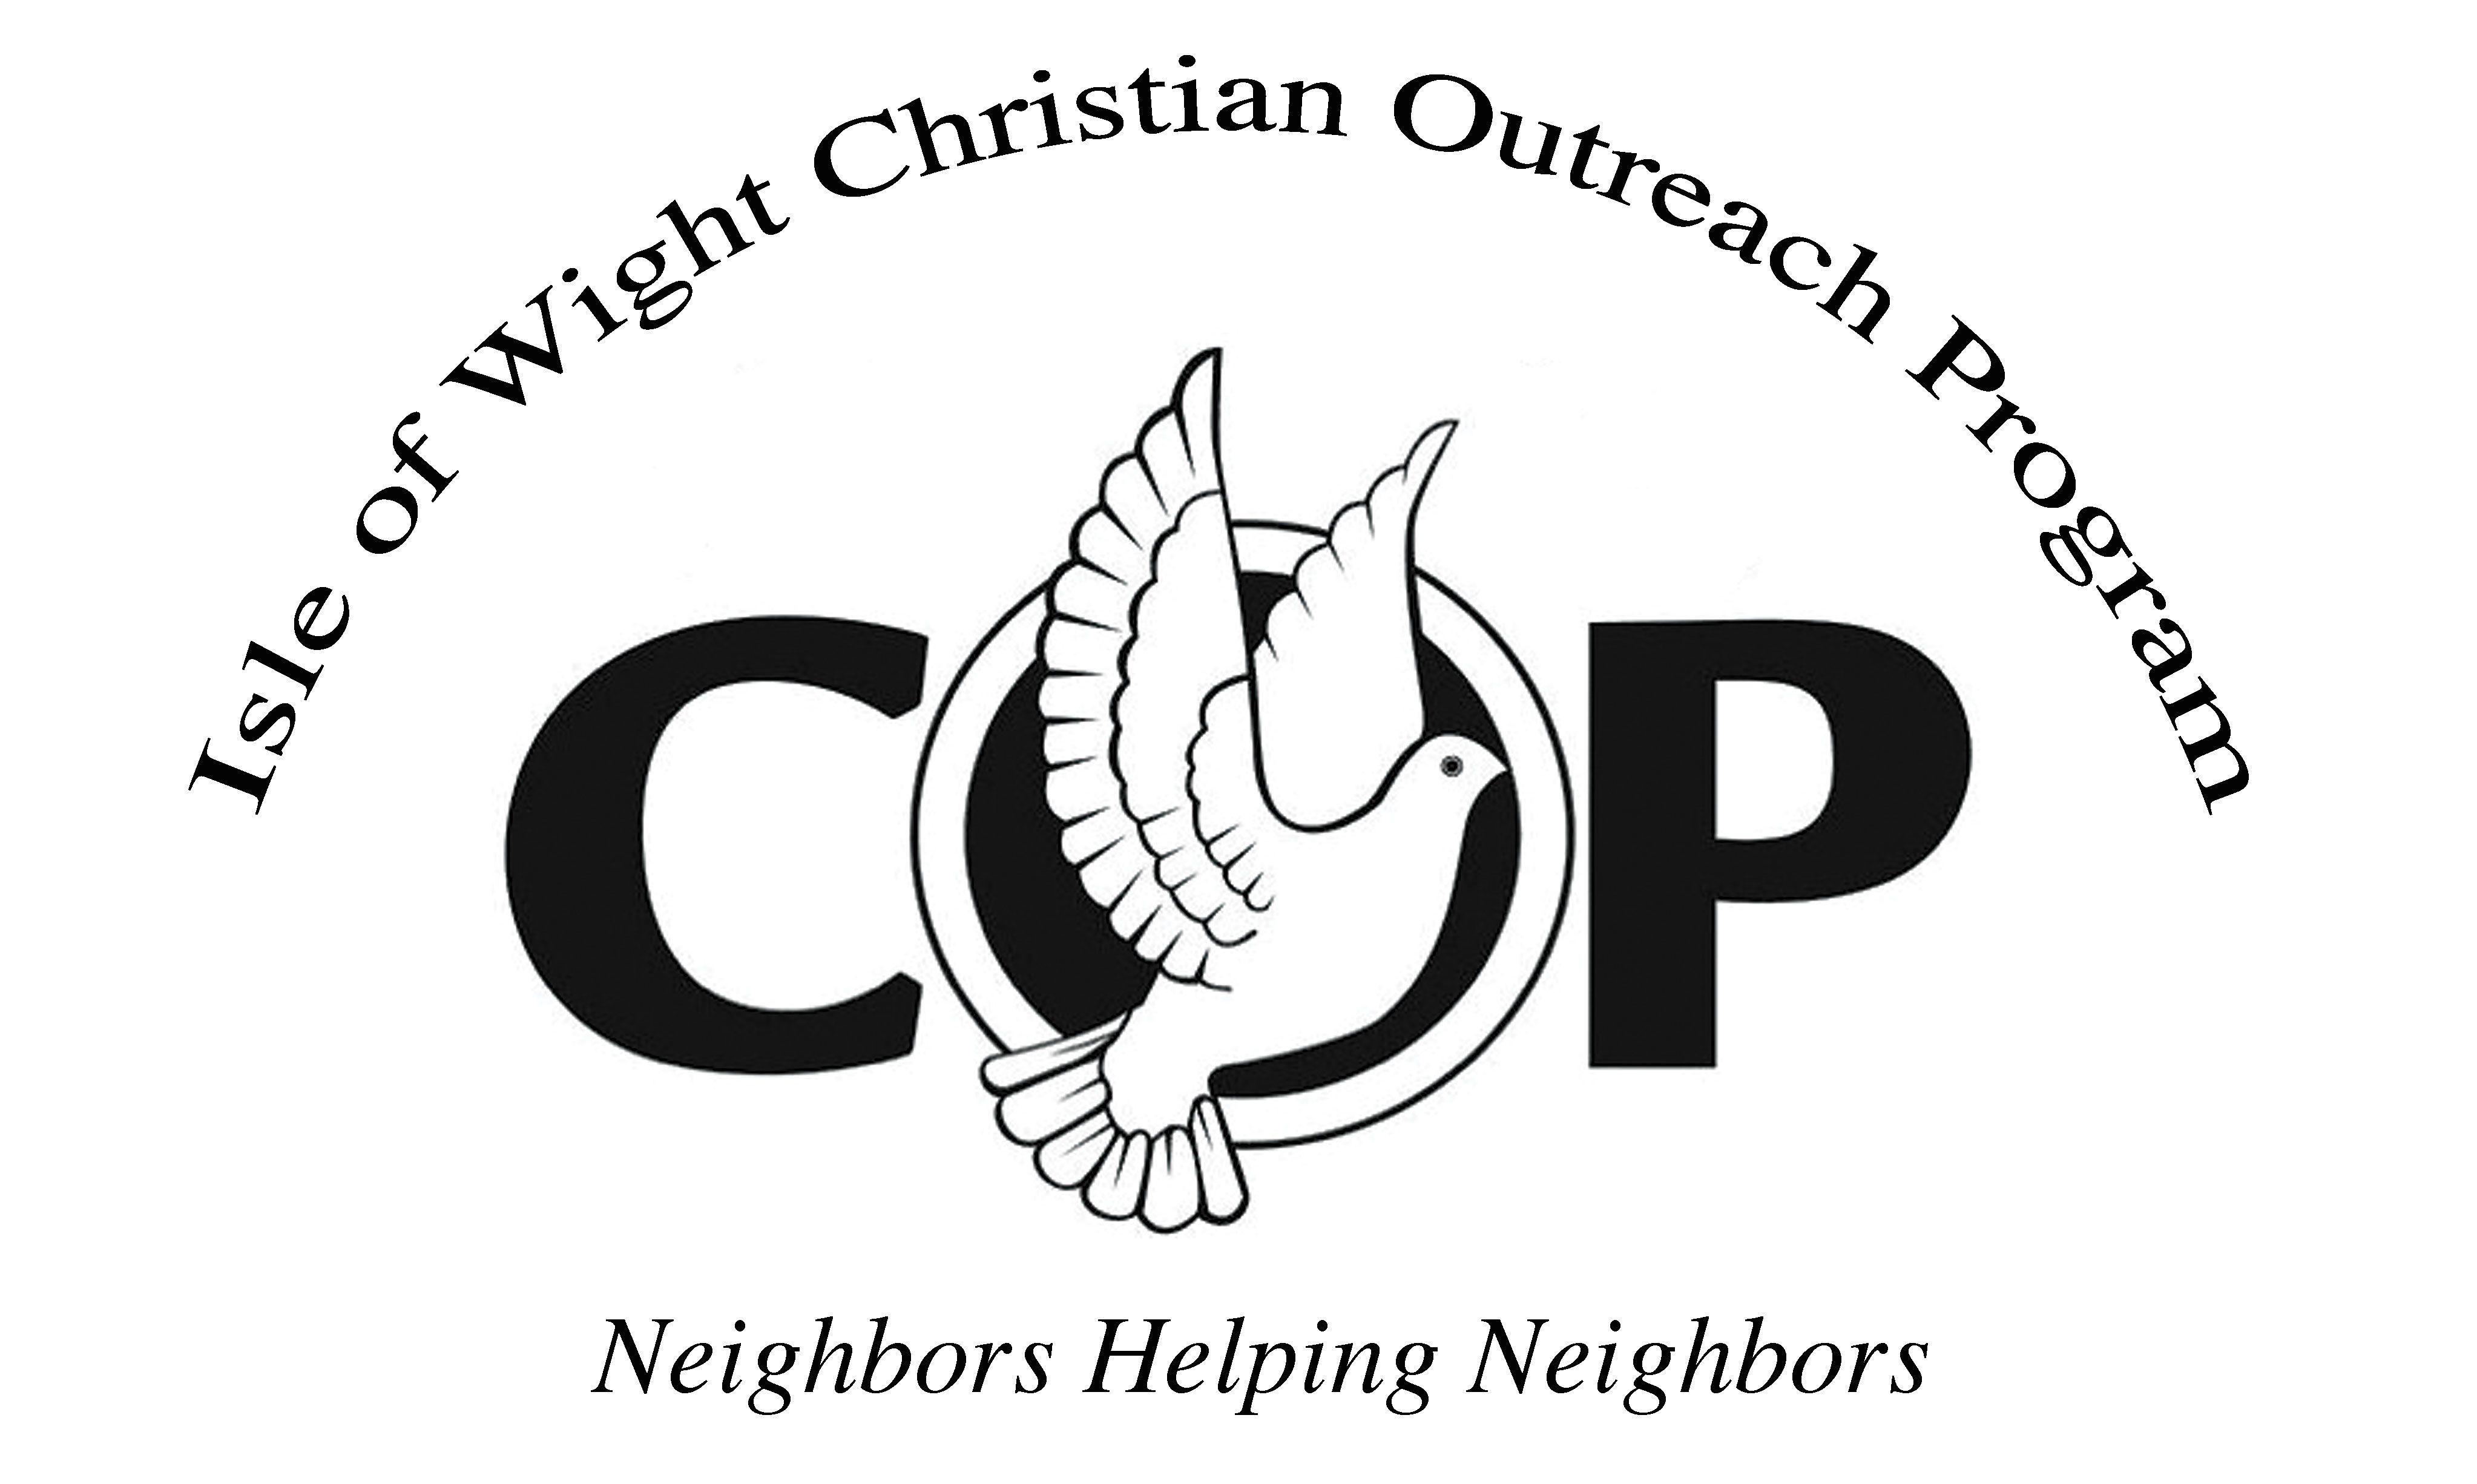 Cop Logo - Isle of Wight Christian Outreach Program